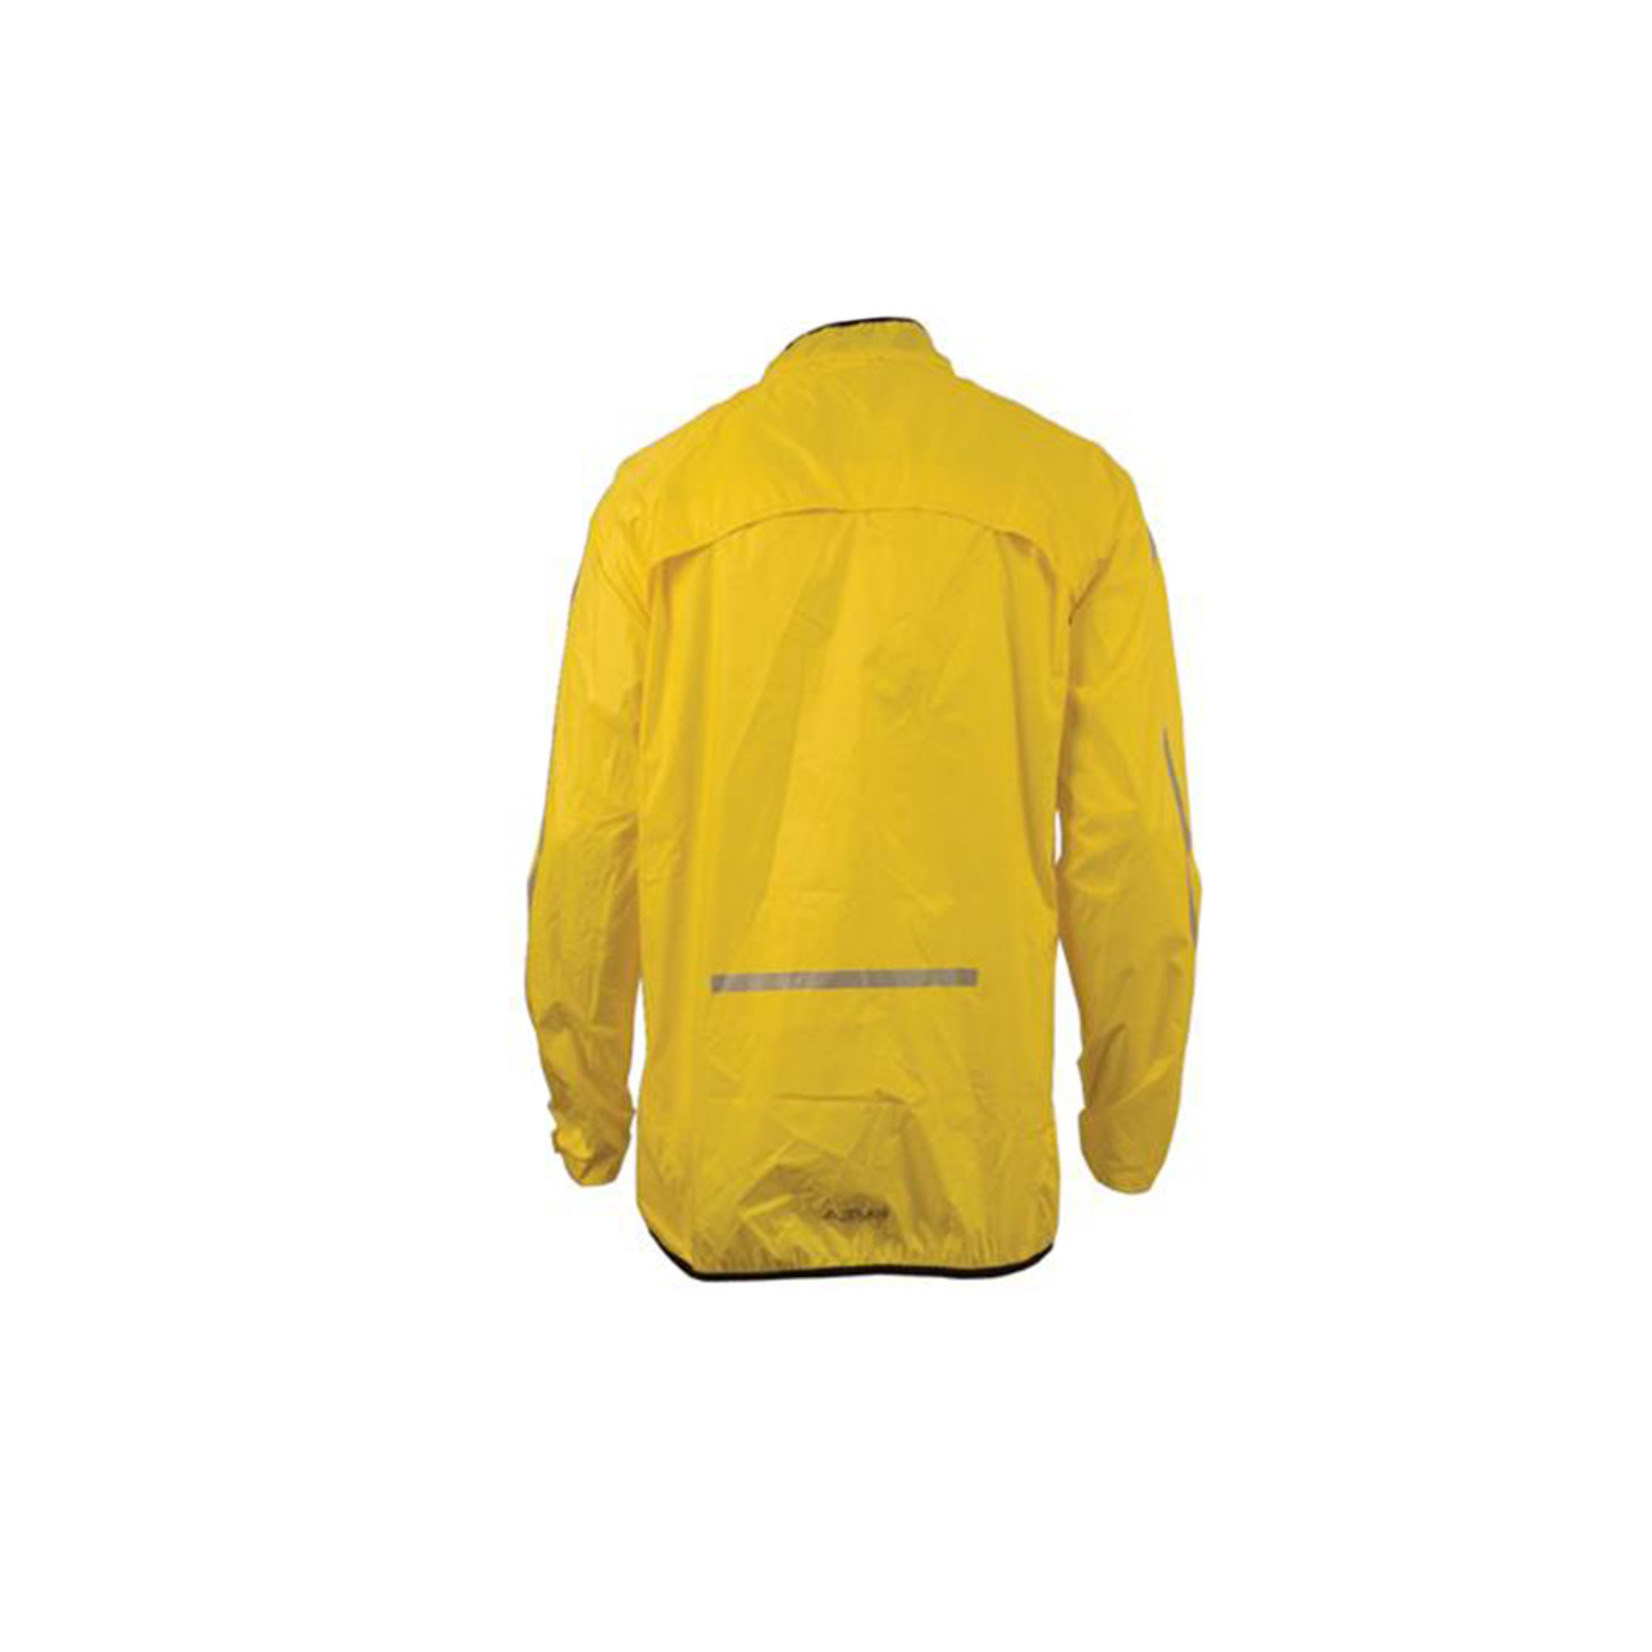 Azur Azur Chaser Jacket - Reflective Waterproof - Fluro Yellow - XXX-Large